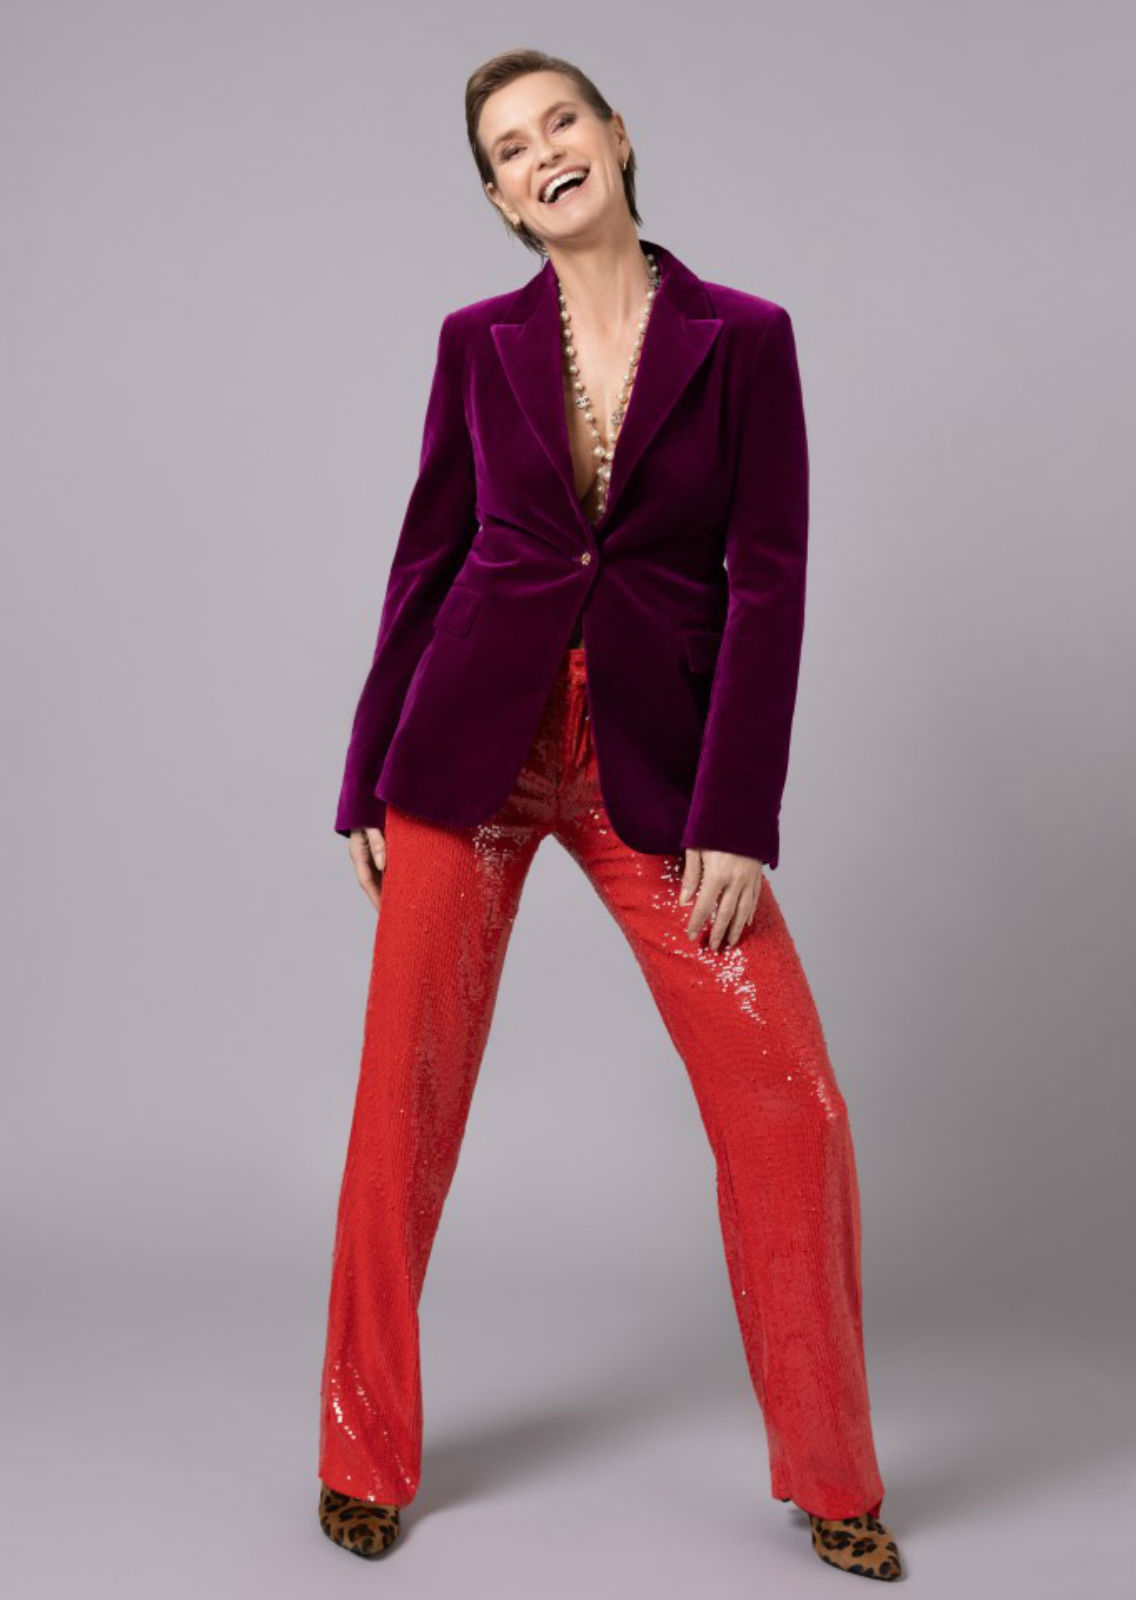 CAROLINE HAARMAN. Carmen Duran Model Agency.